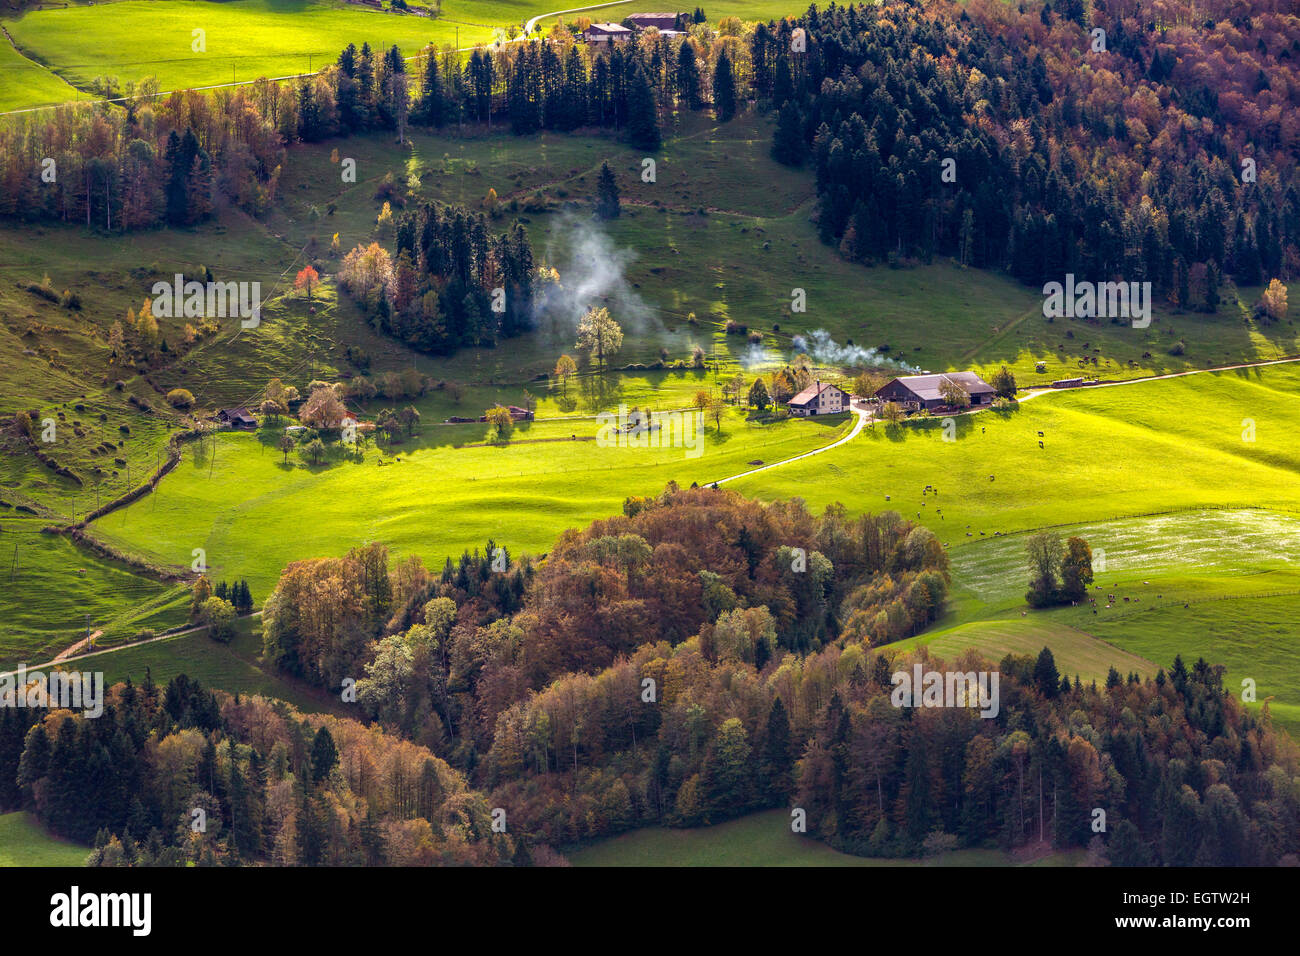 Naturpark Thal, Ramiswil, Solothurn canton, Switzerland. Stock Photo